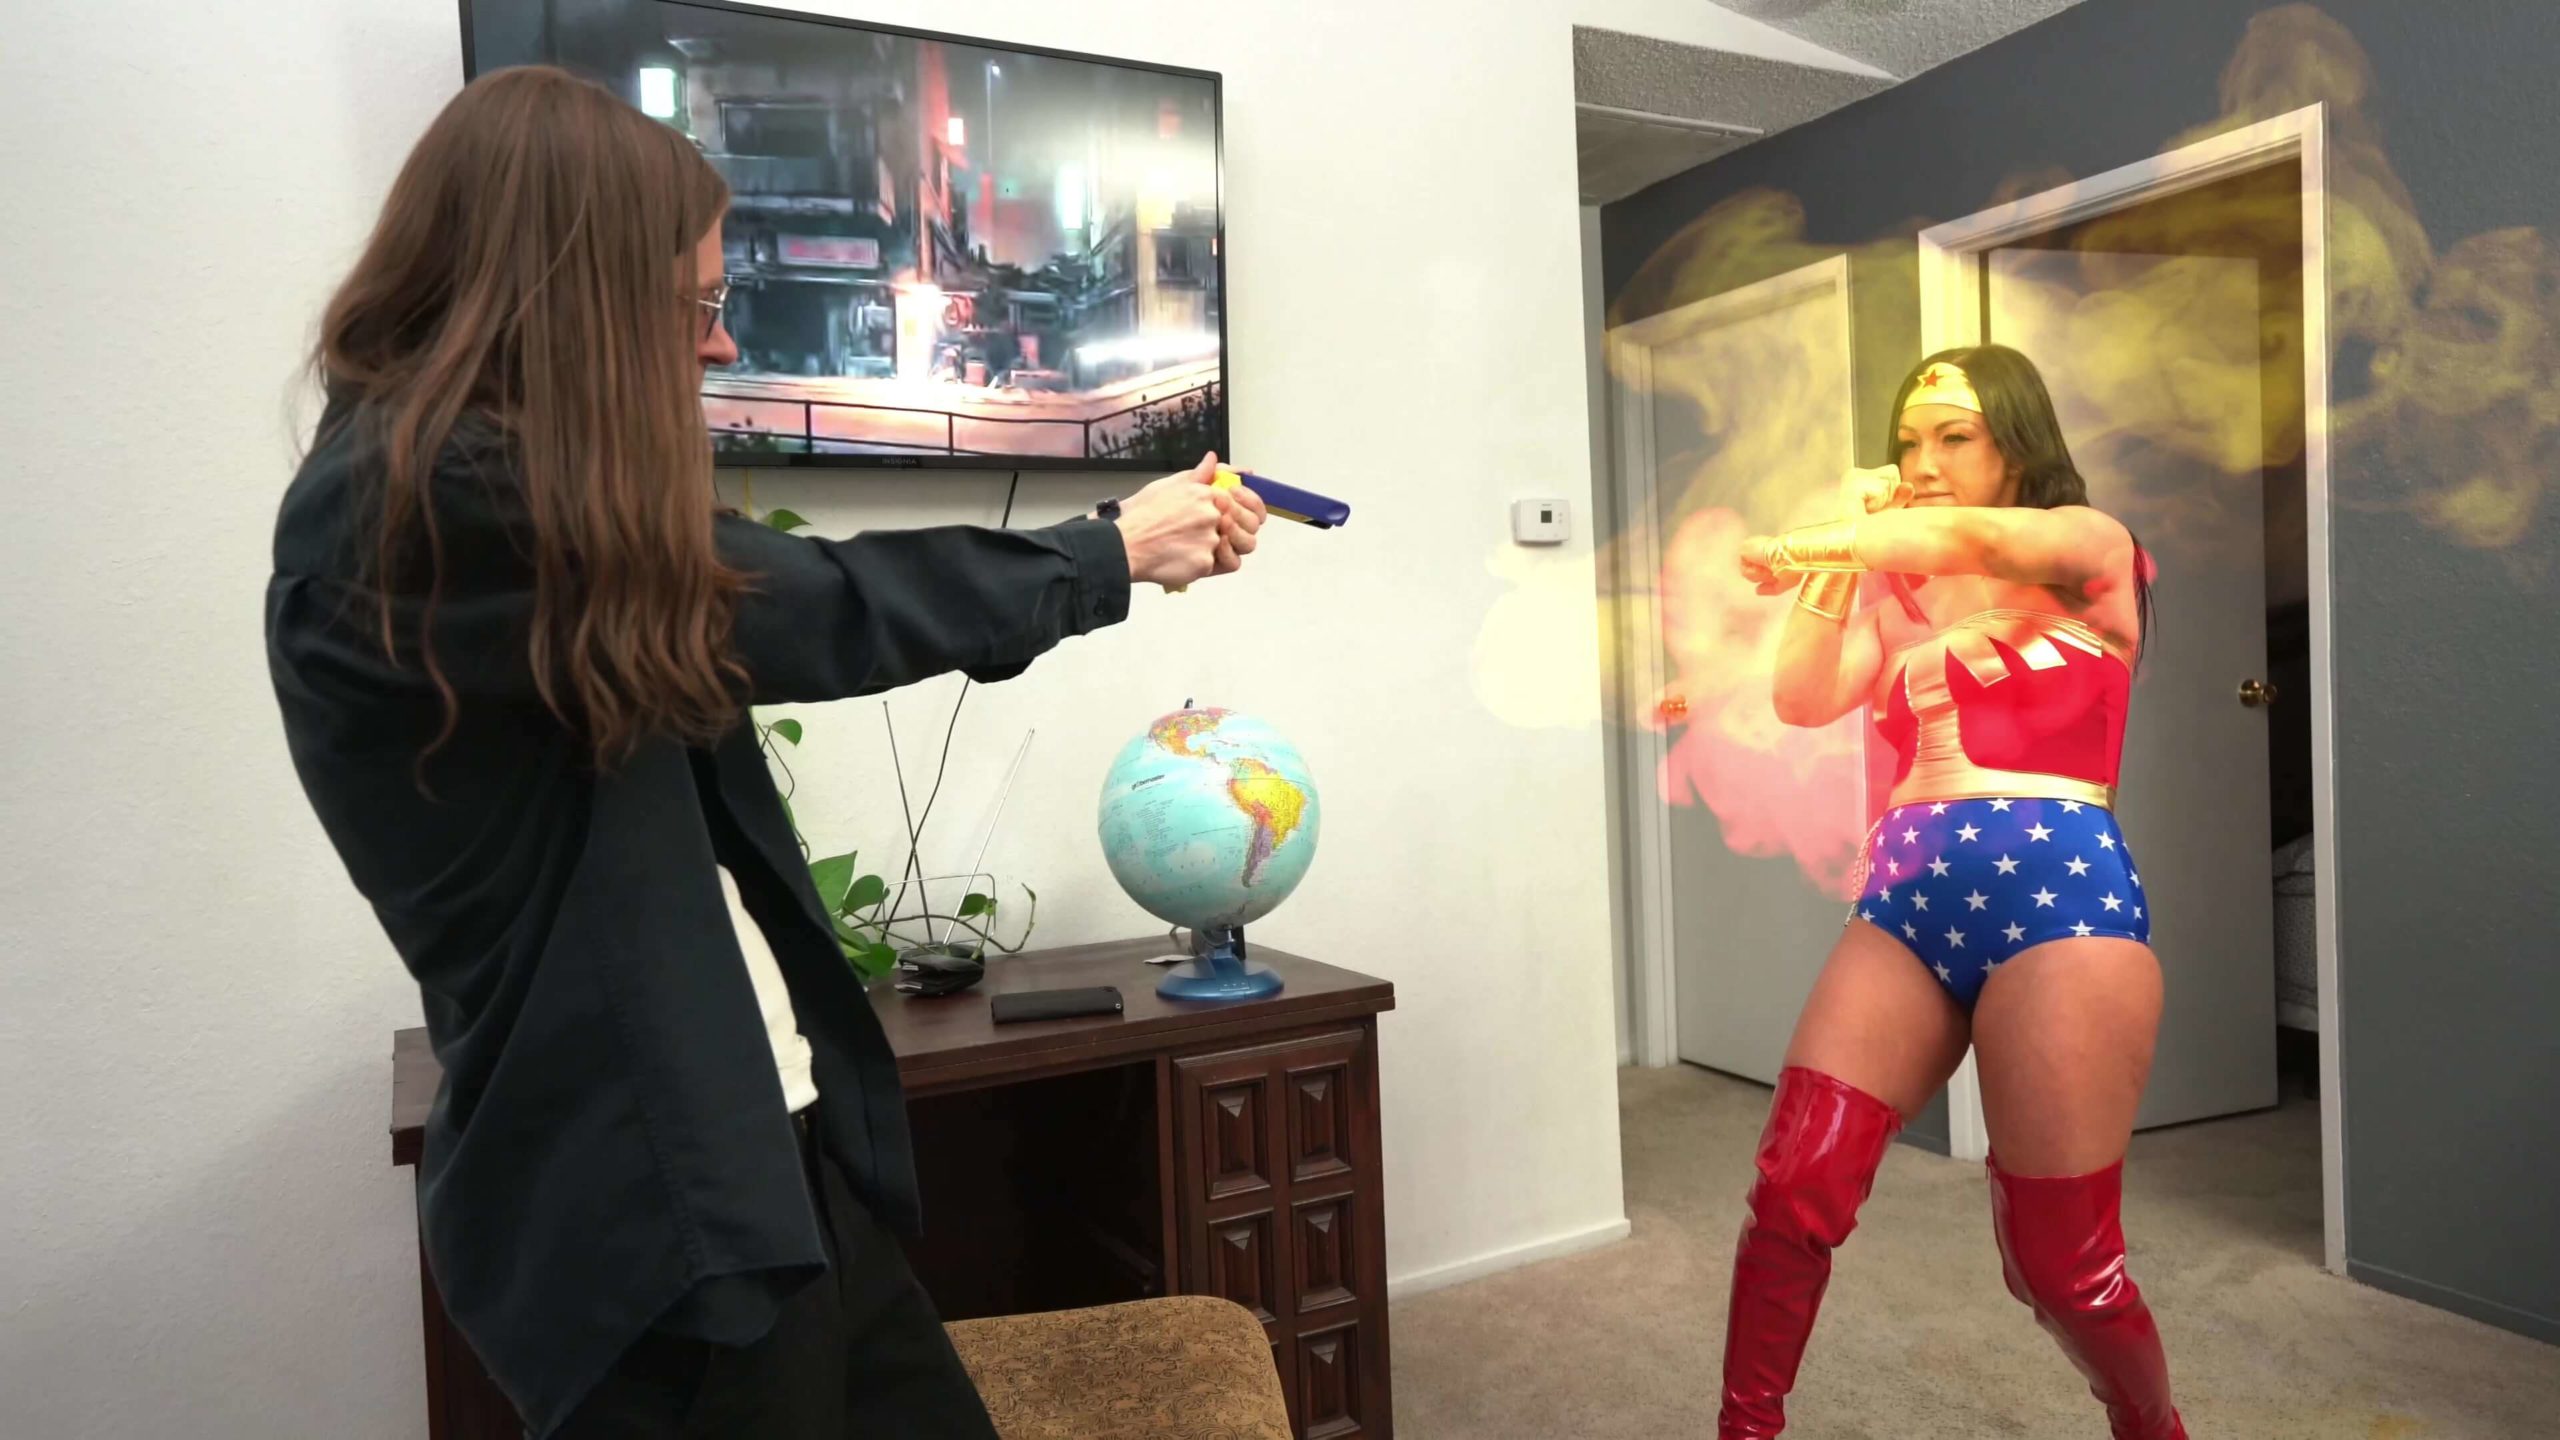 Super Review Wonder Woman Becomes Super Slut pic pic